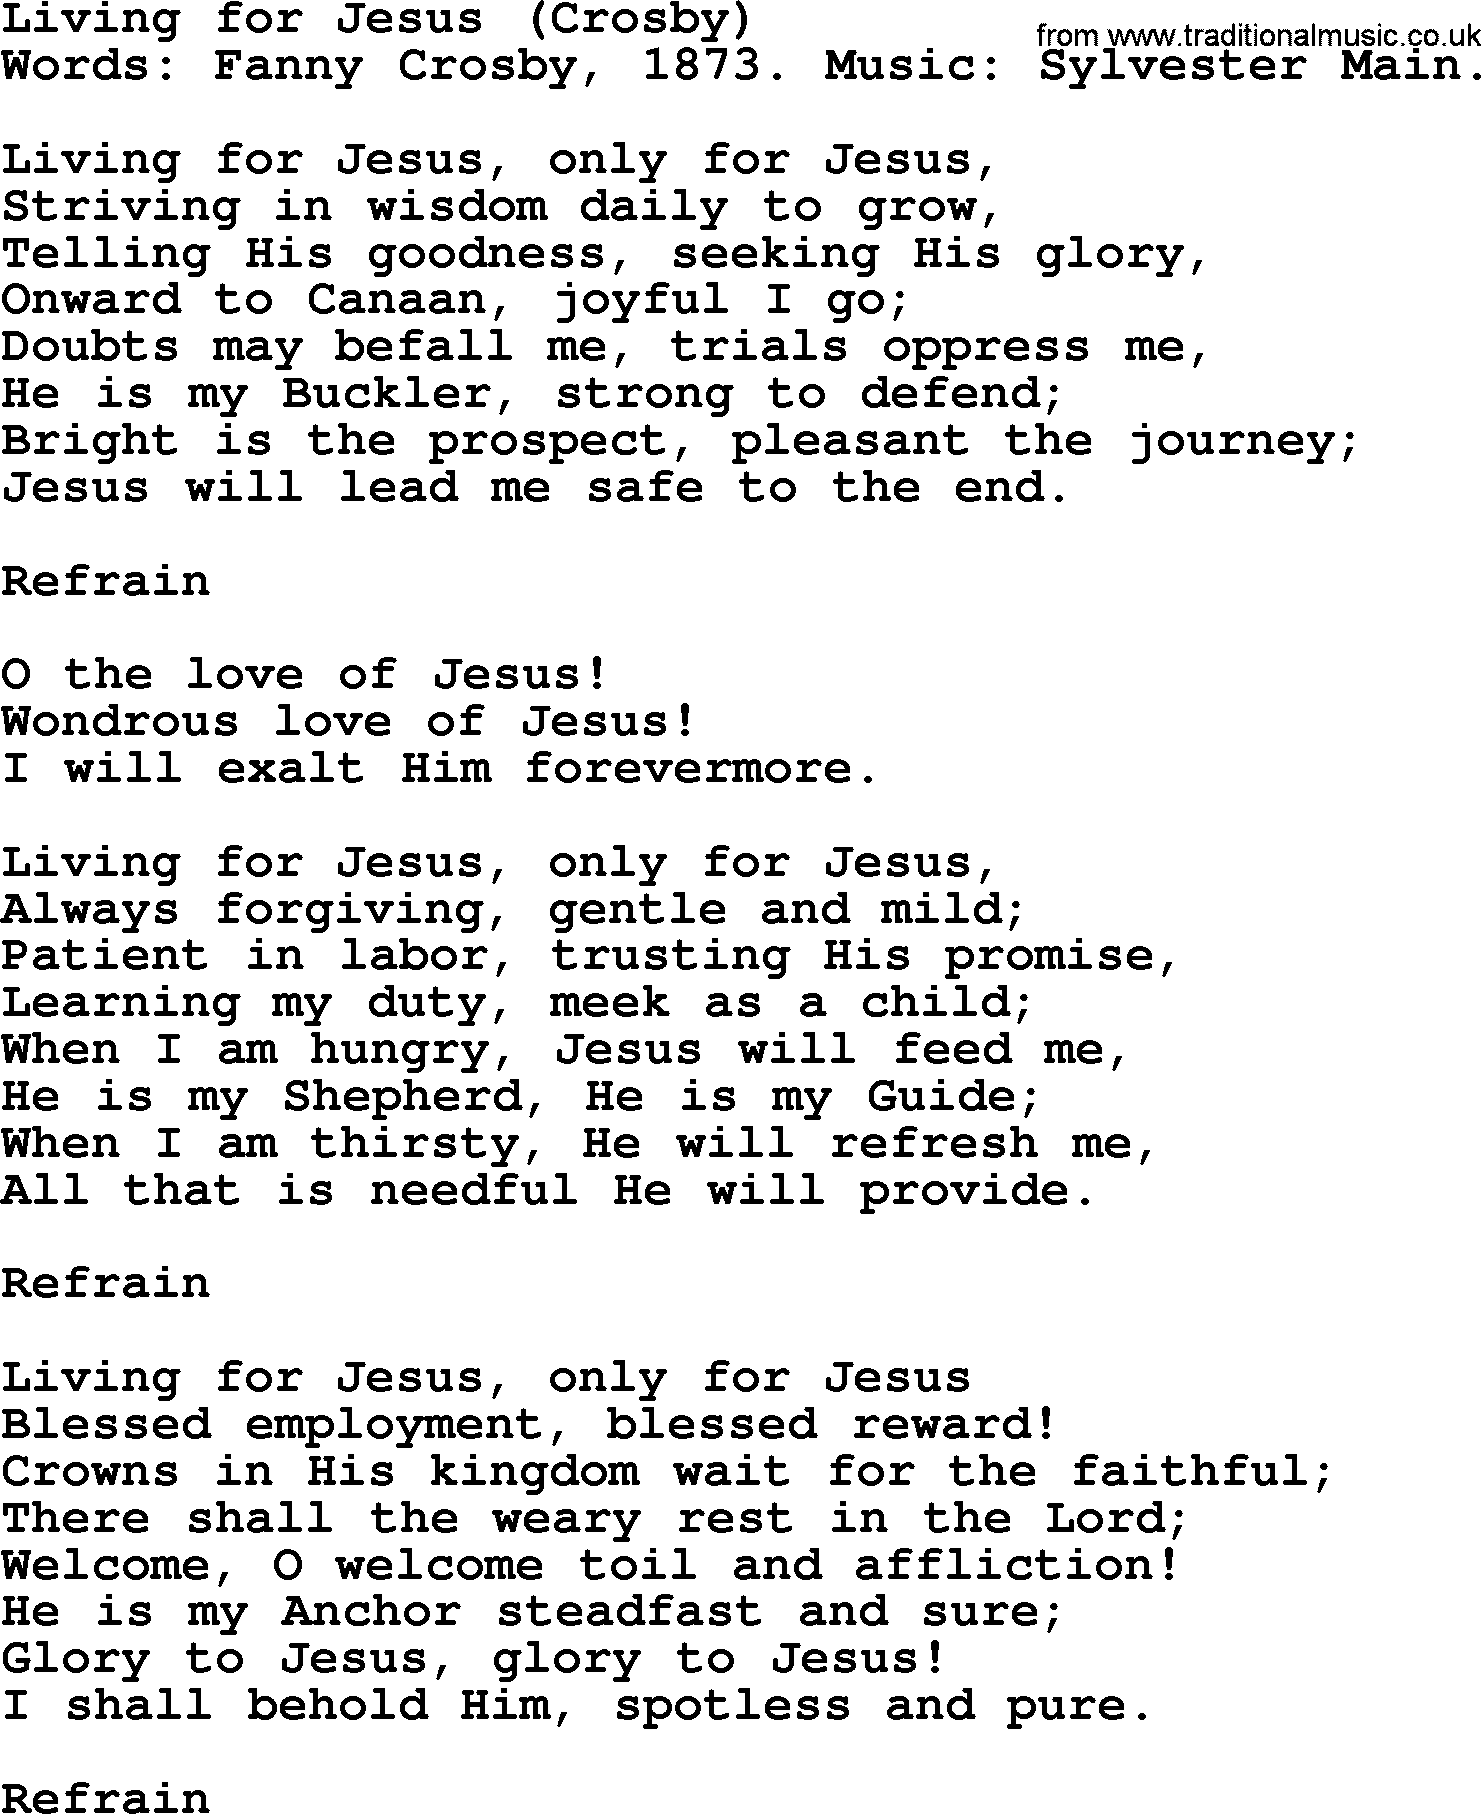 Fanny Crosby song: Living For Jesus, lyrics